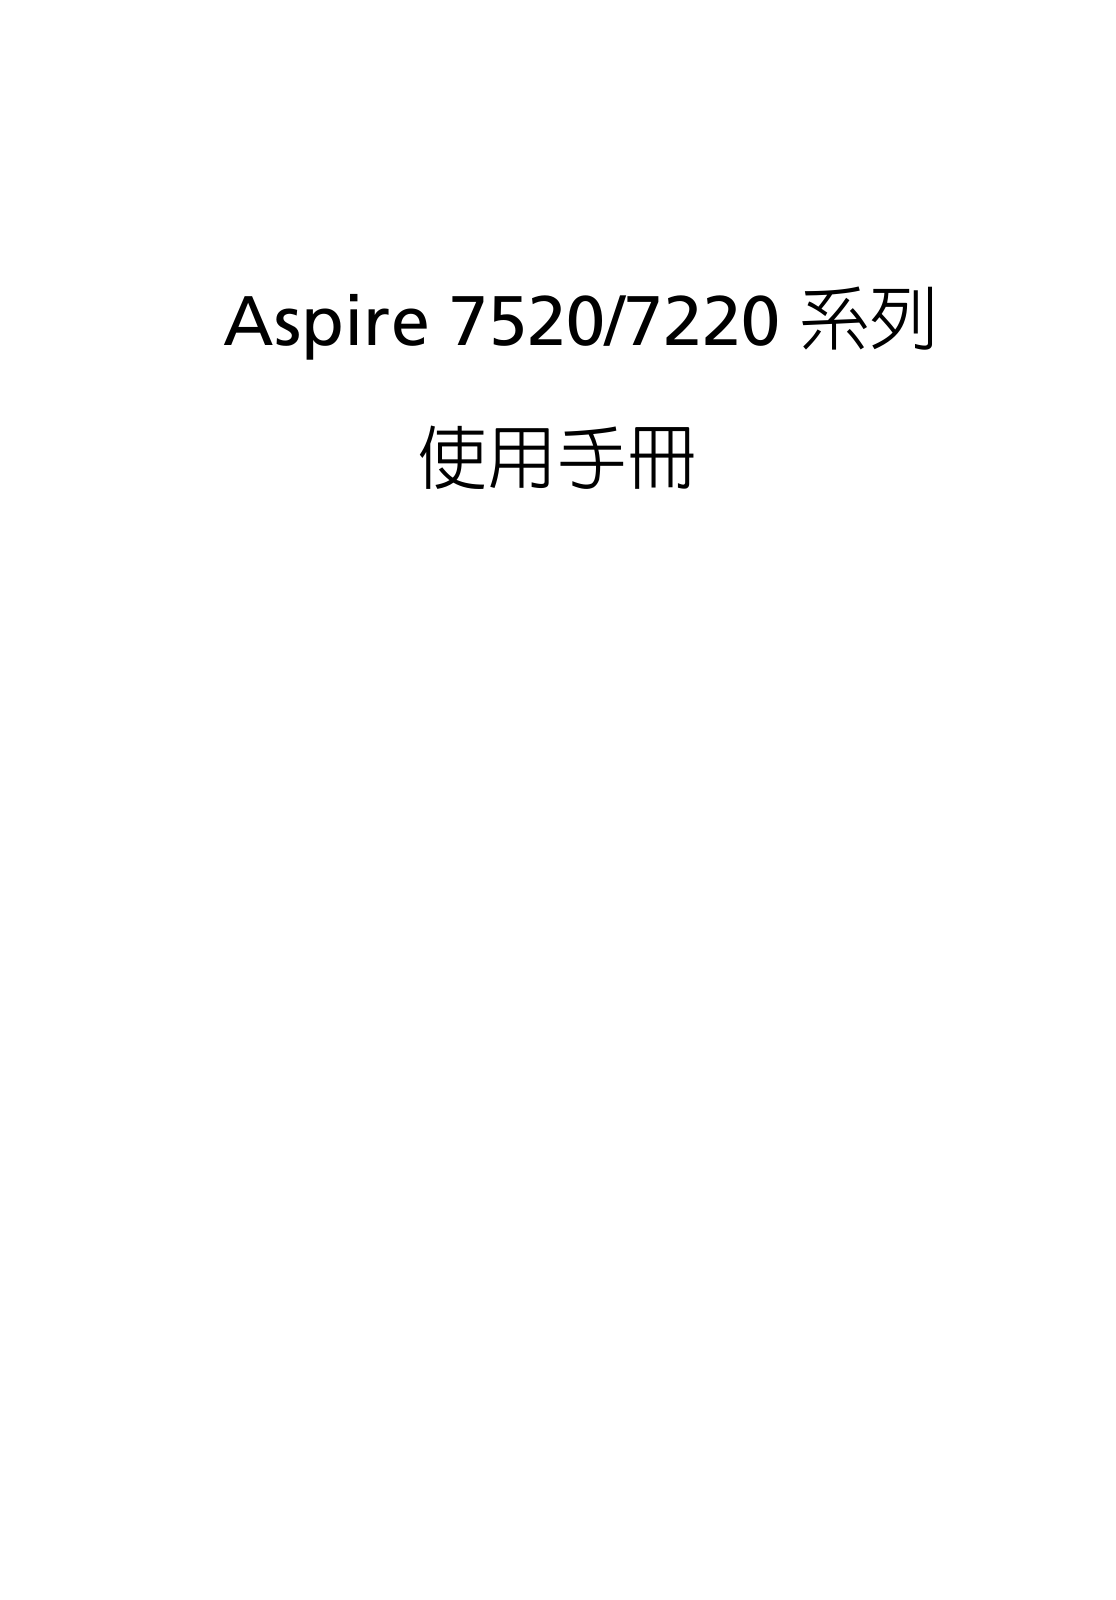 Acer ASPIRE 7220, ASPIRE 7520G, ASPIRE 7520 User Manual